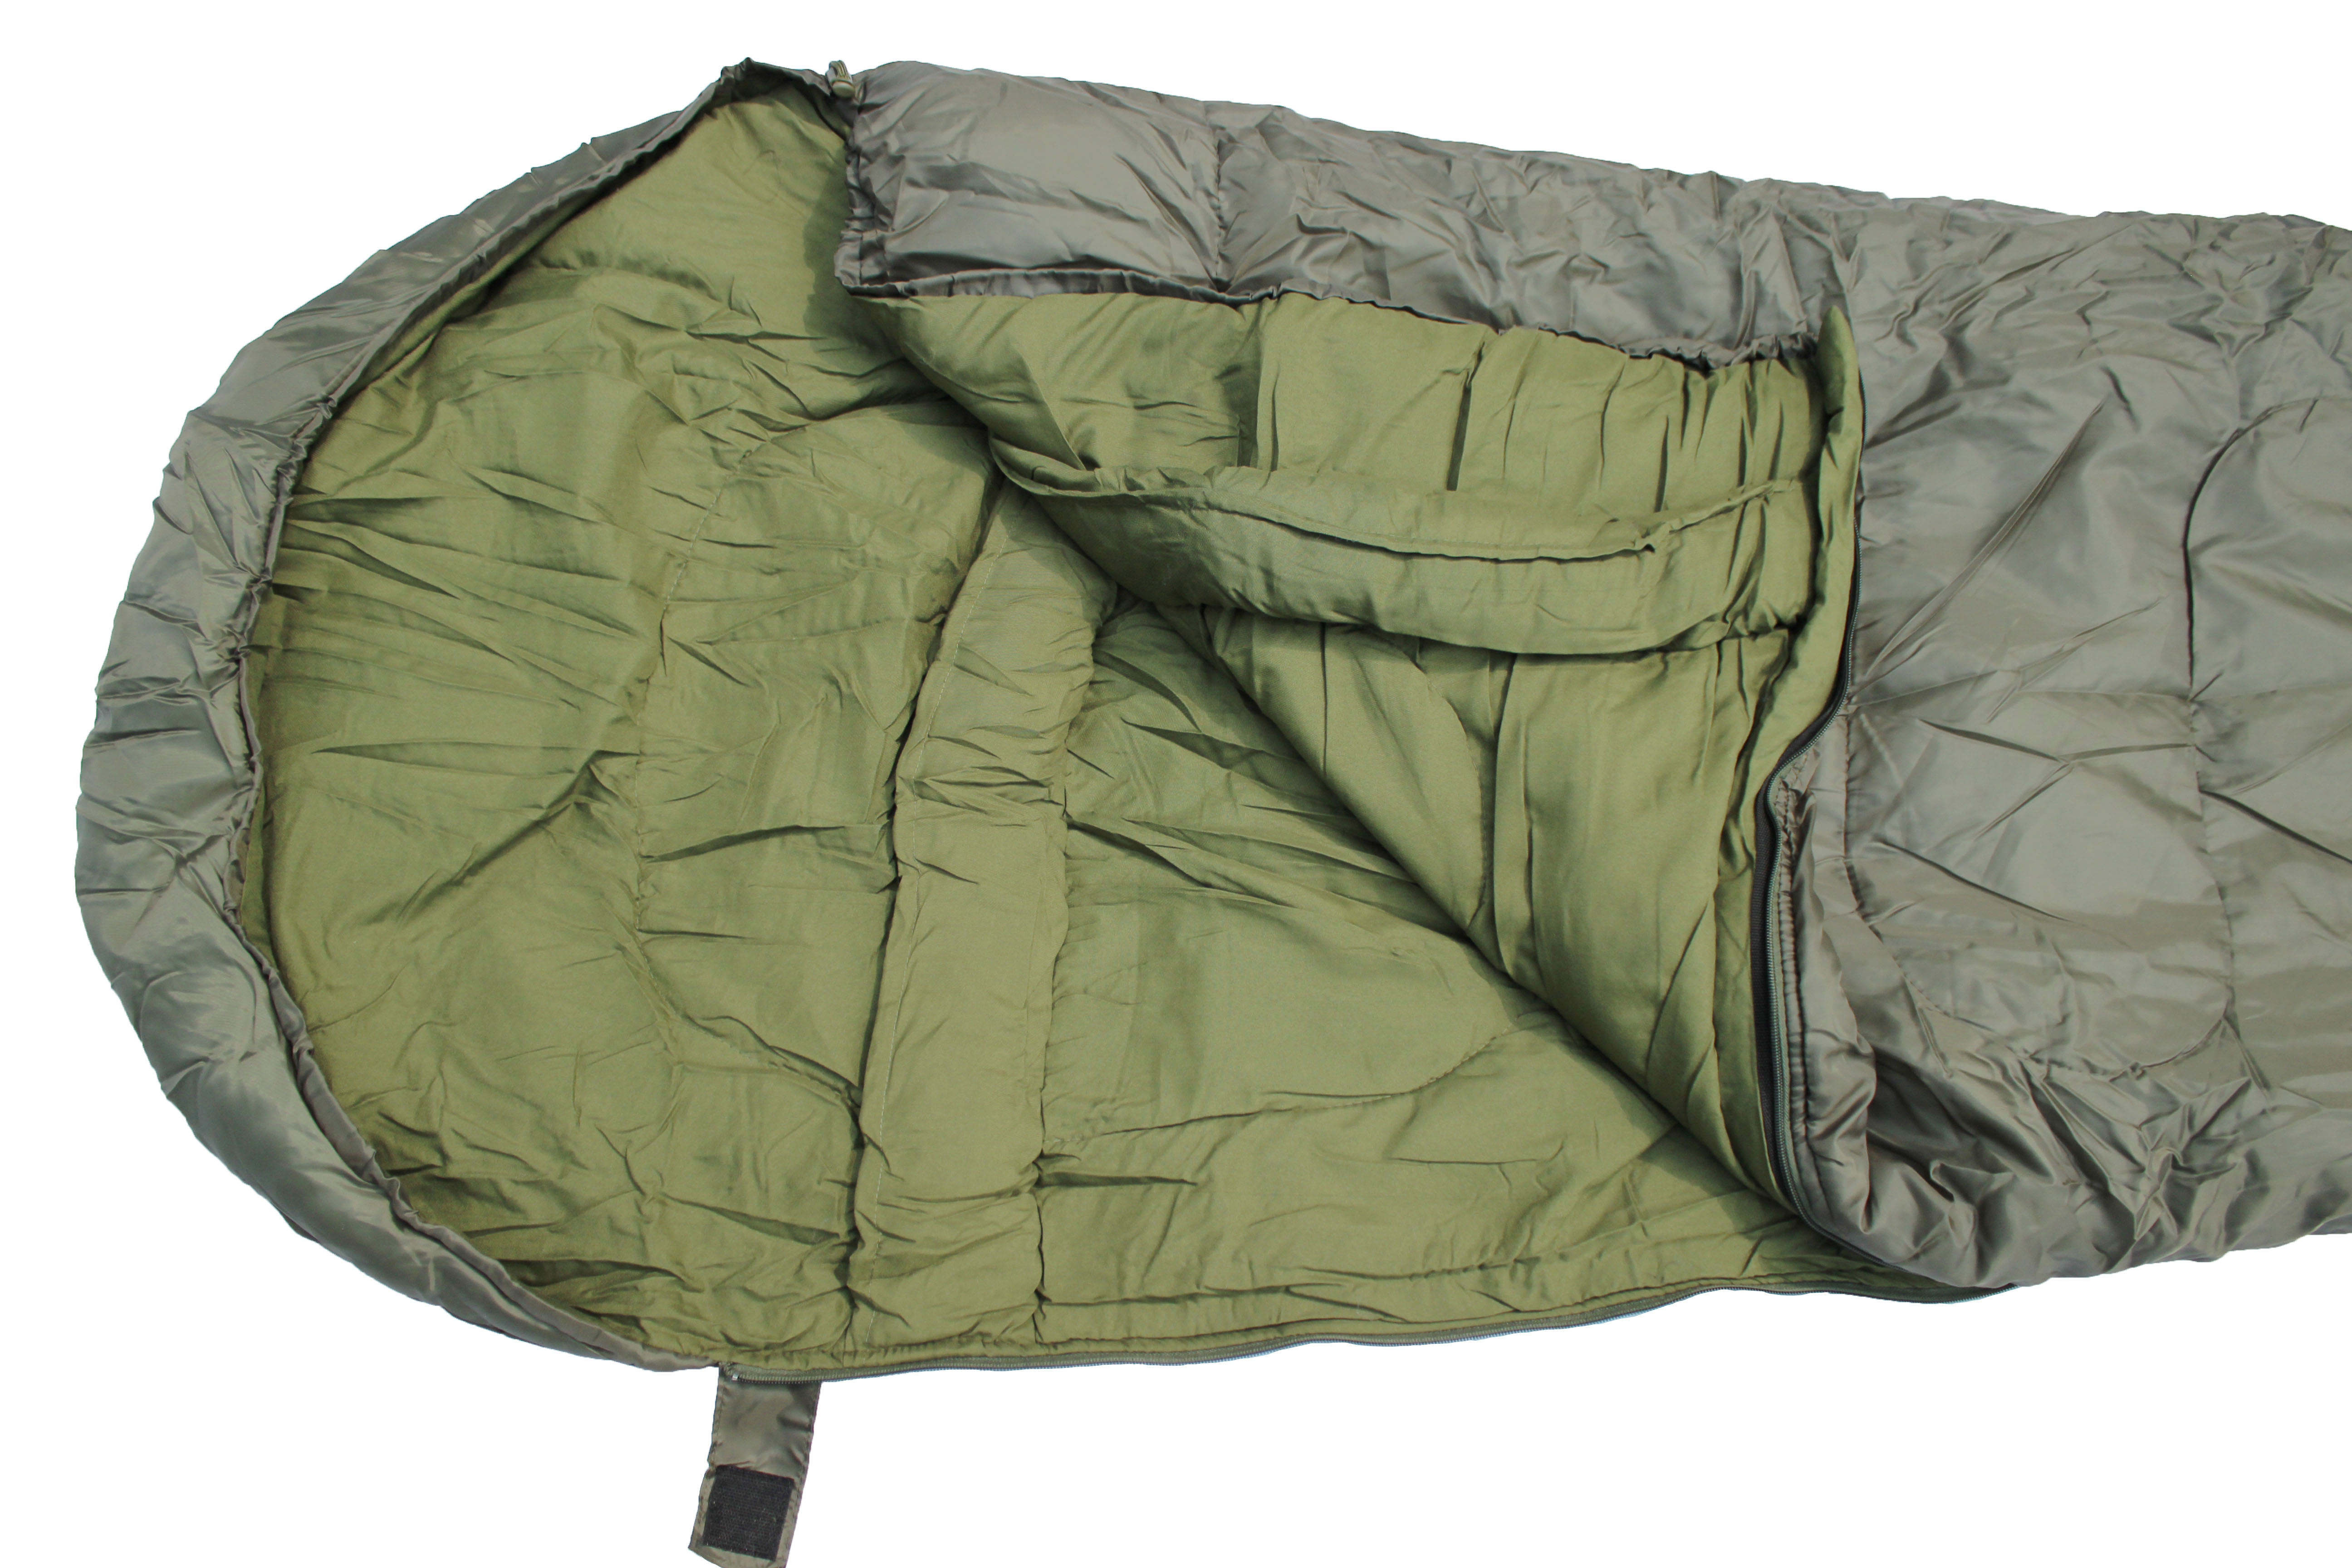 NaturGuard military army green outdoor camping Mummy sleeping bag 